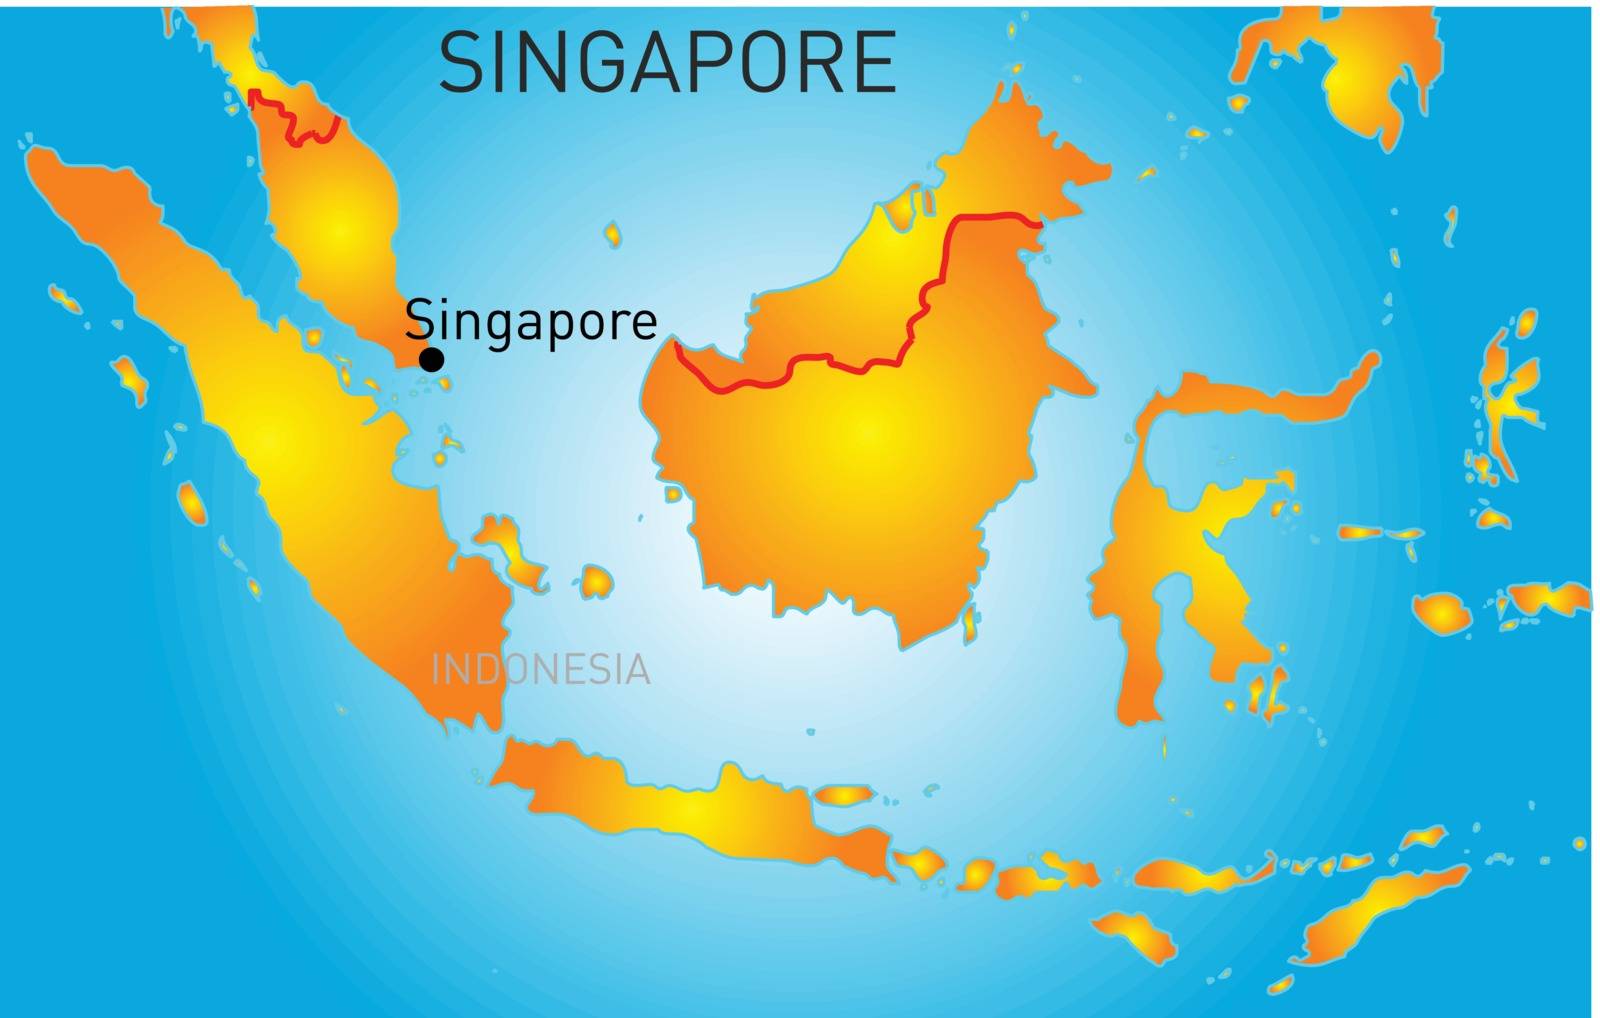 Republic of Singapore by rusak